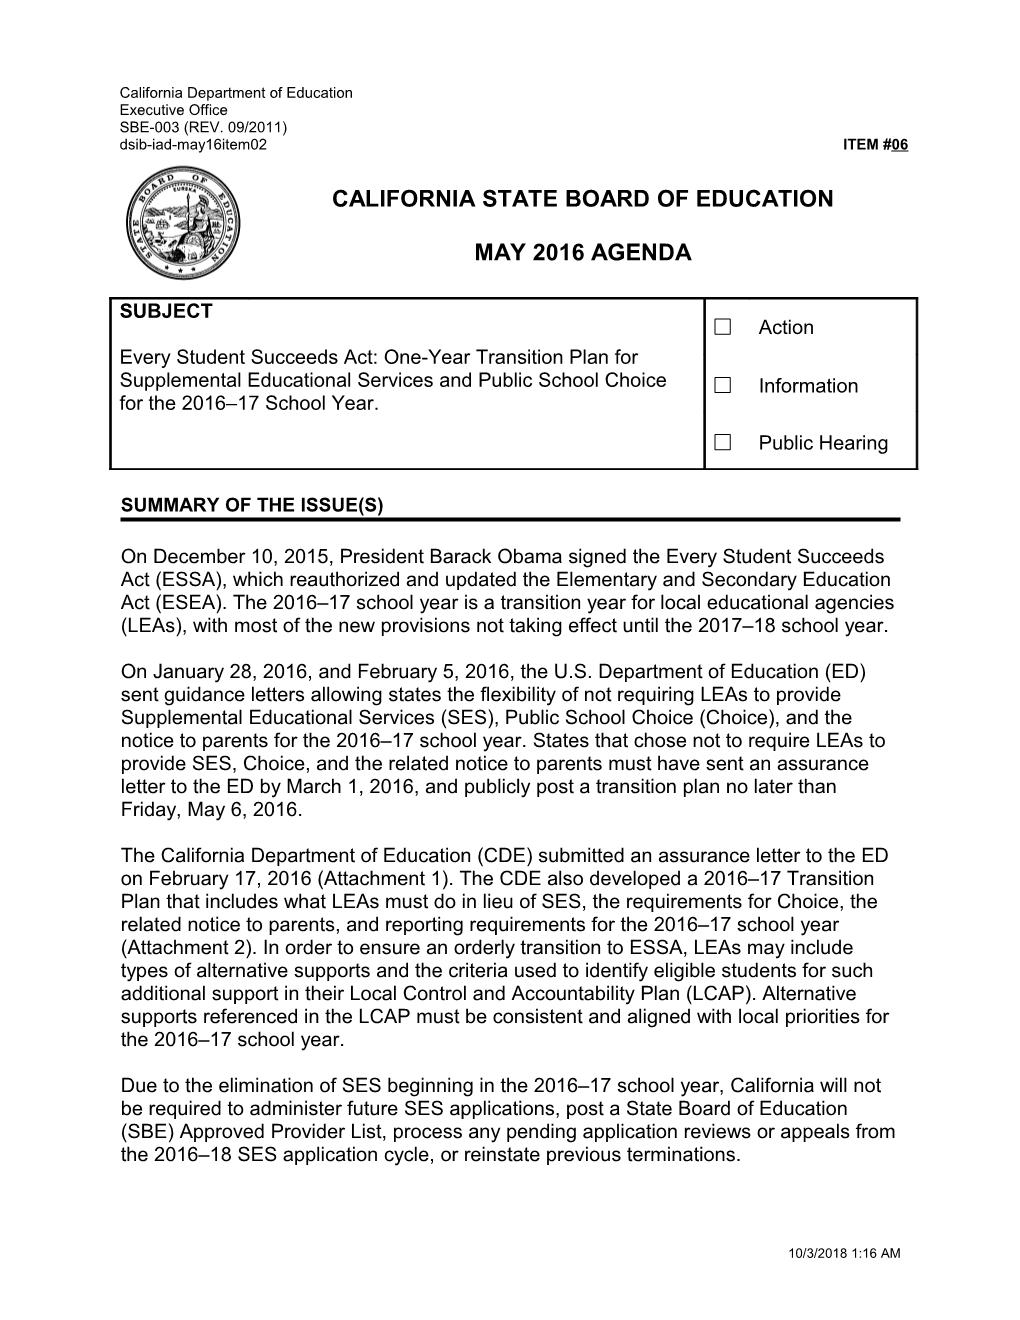 May 2016 Agenda Item 06 - Meeting Agendas (CA State Board of Education)